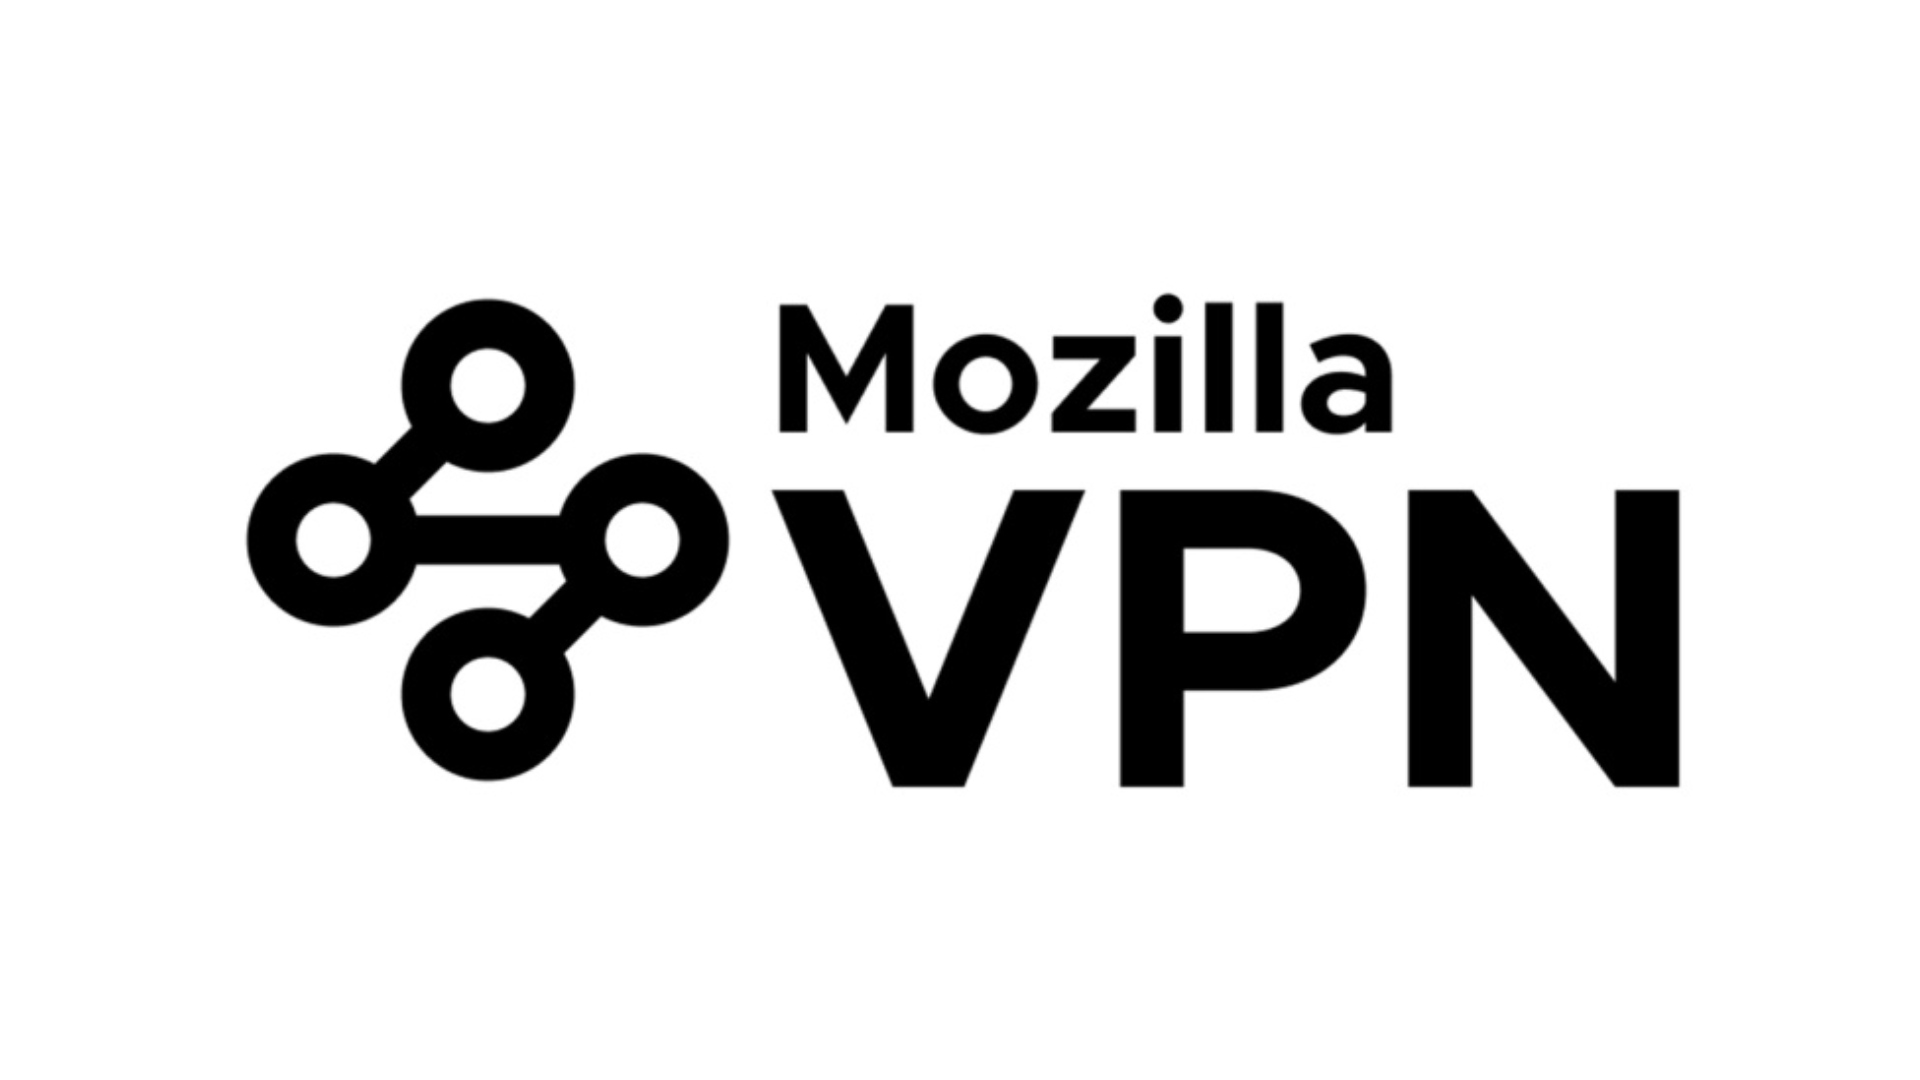 Best Firefox VPN: Mozilla VPN.  The image shows the company logo.